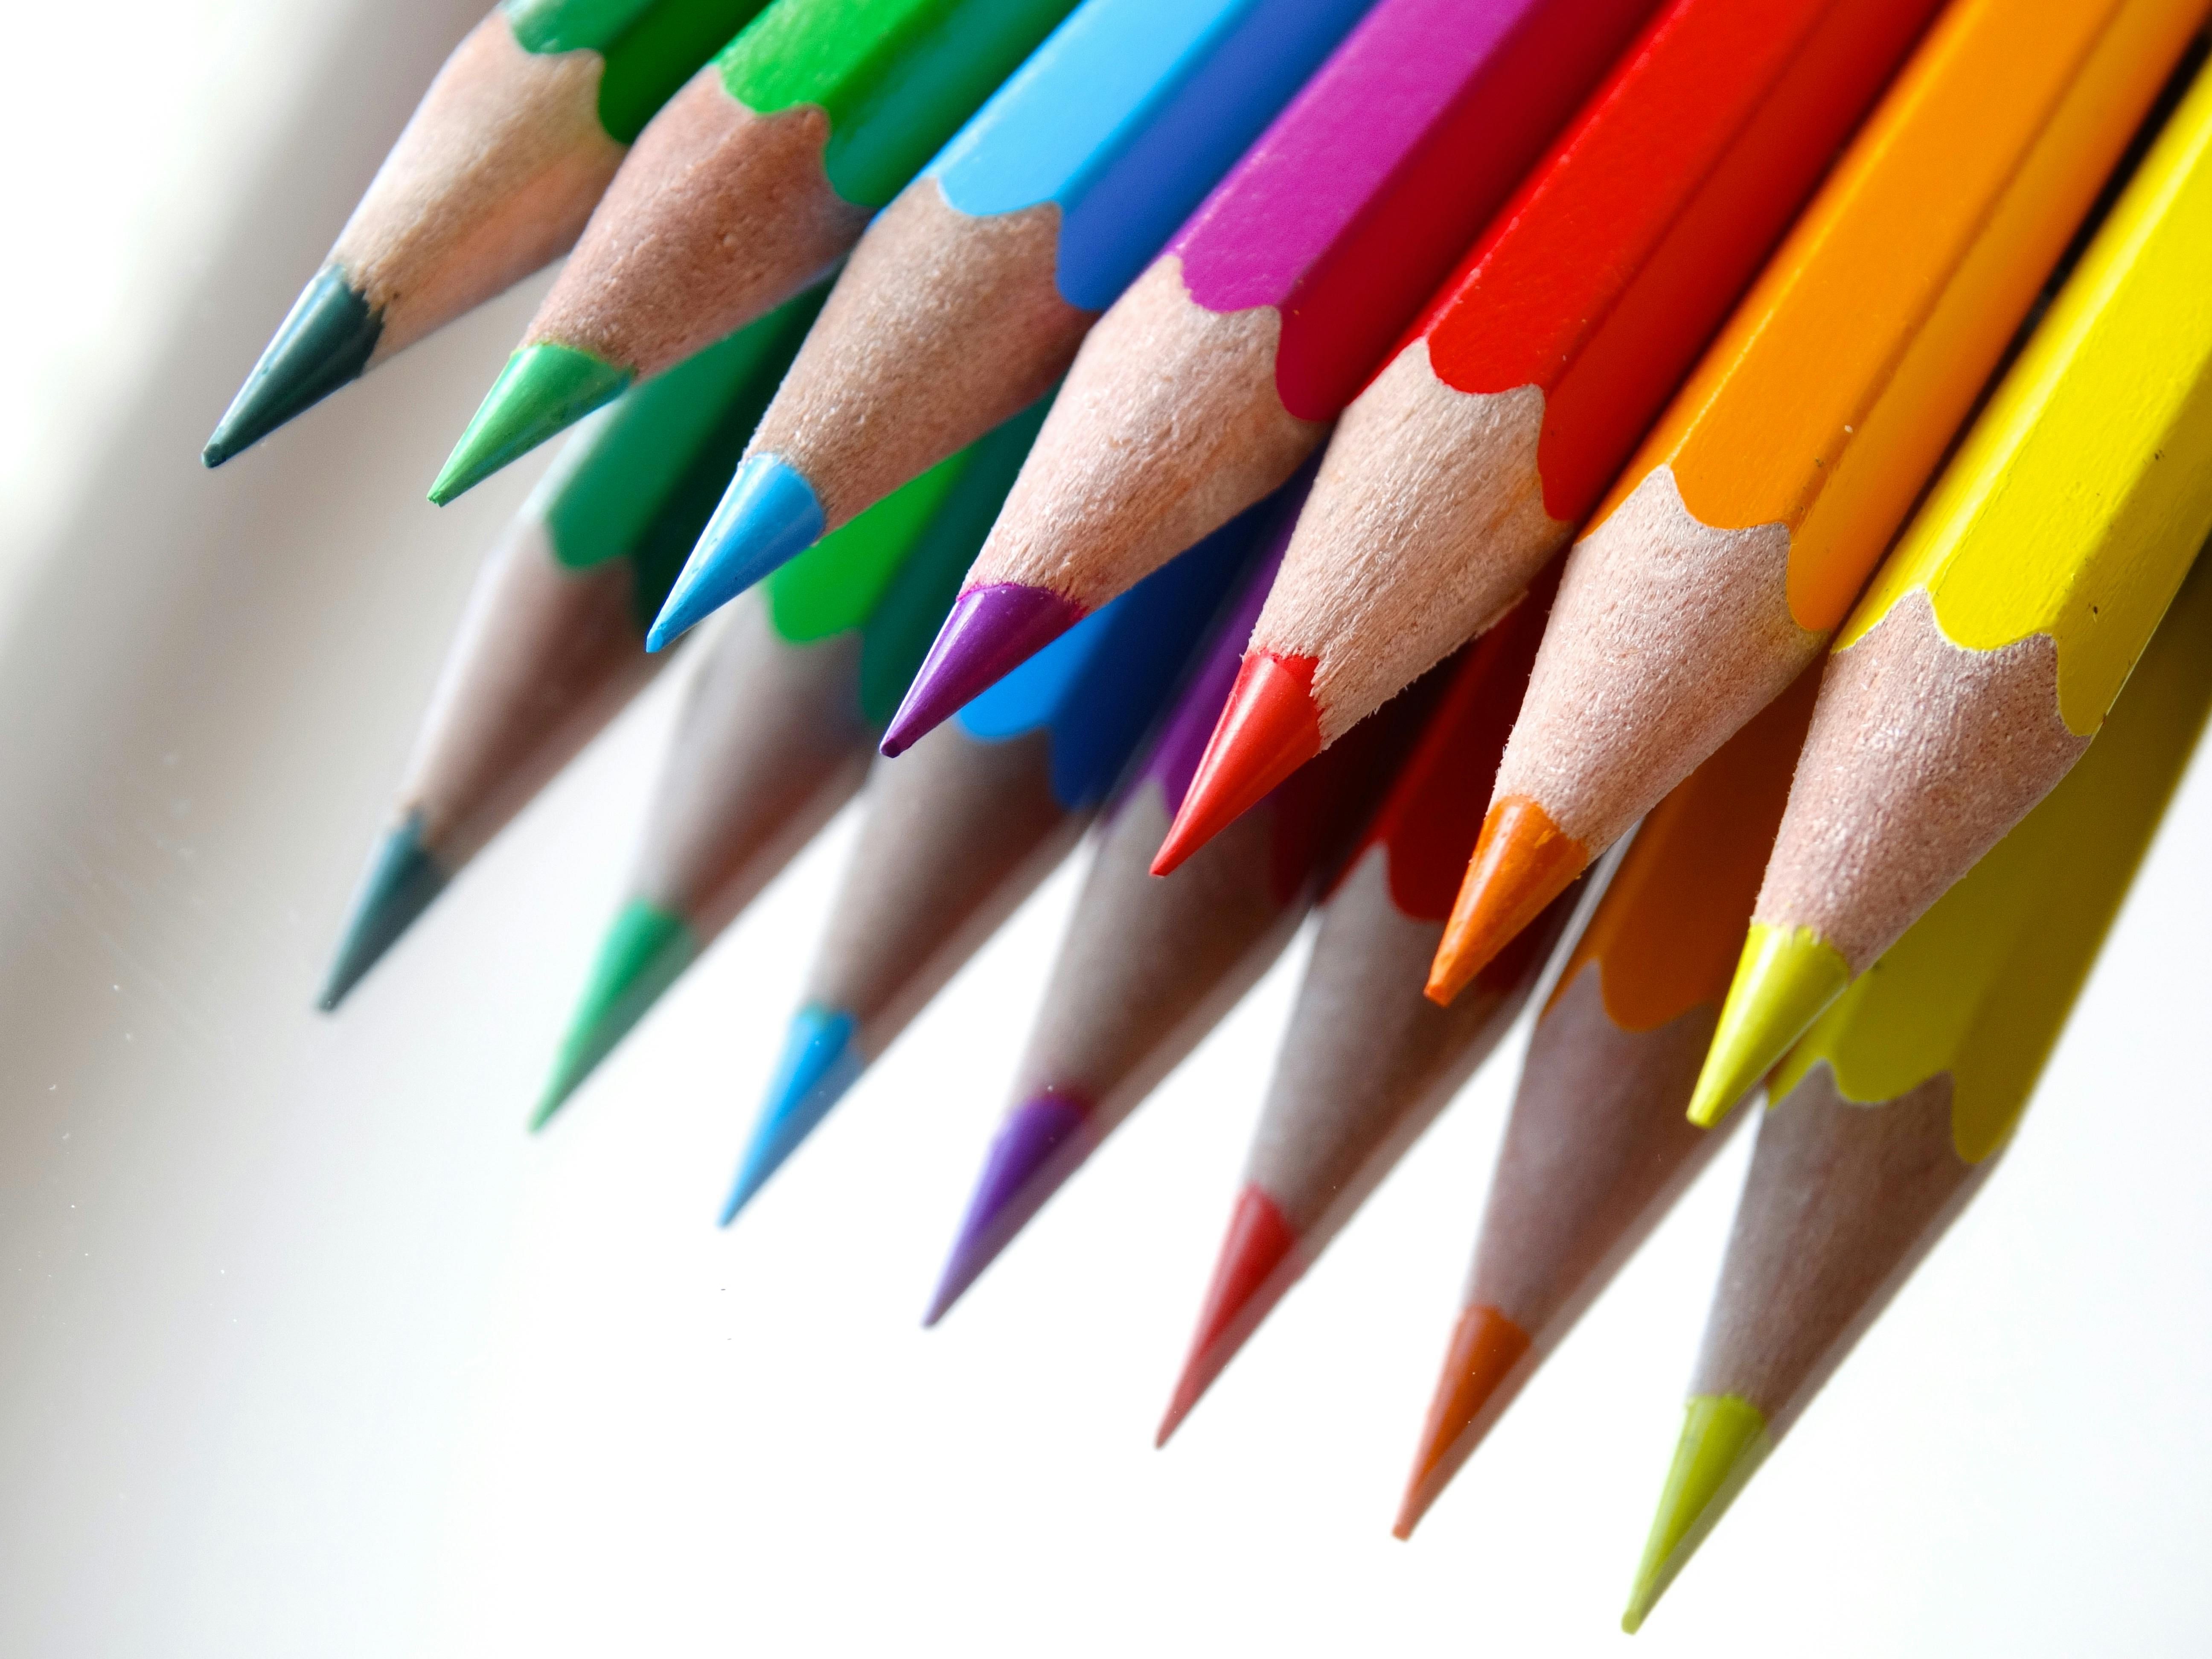 Multi Colored Pencils over White Background · Free Stock Photo